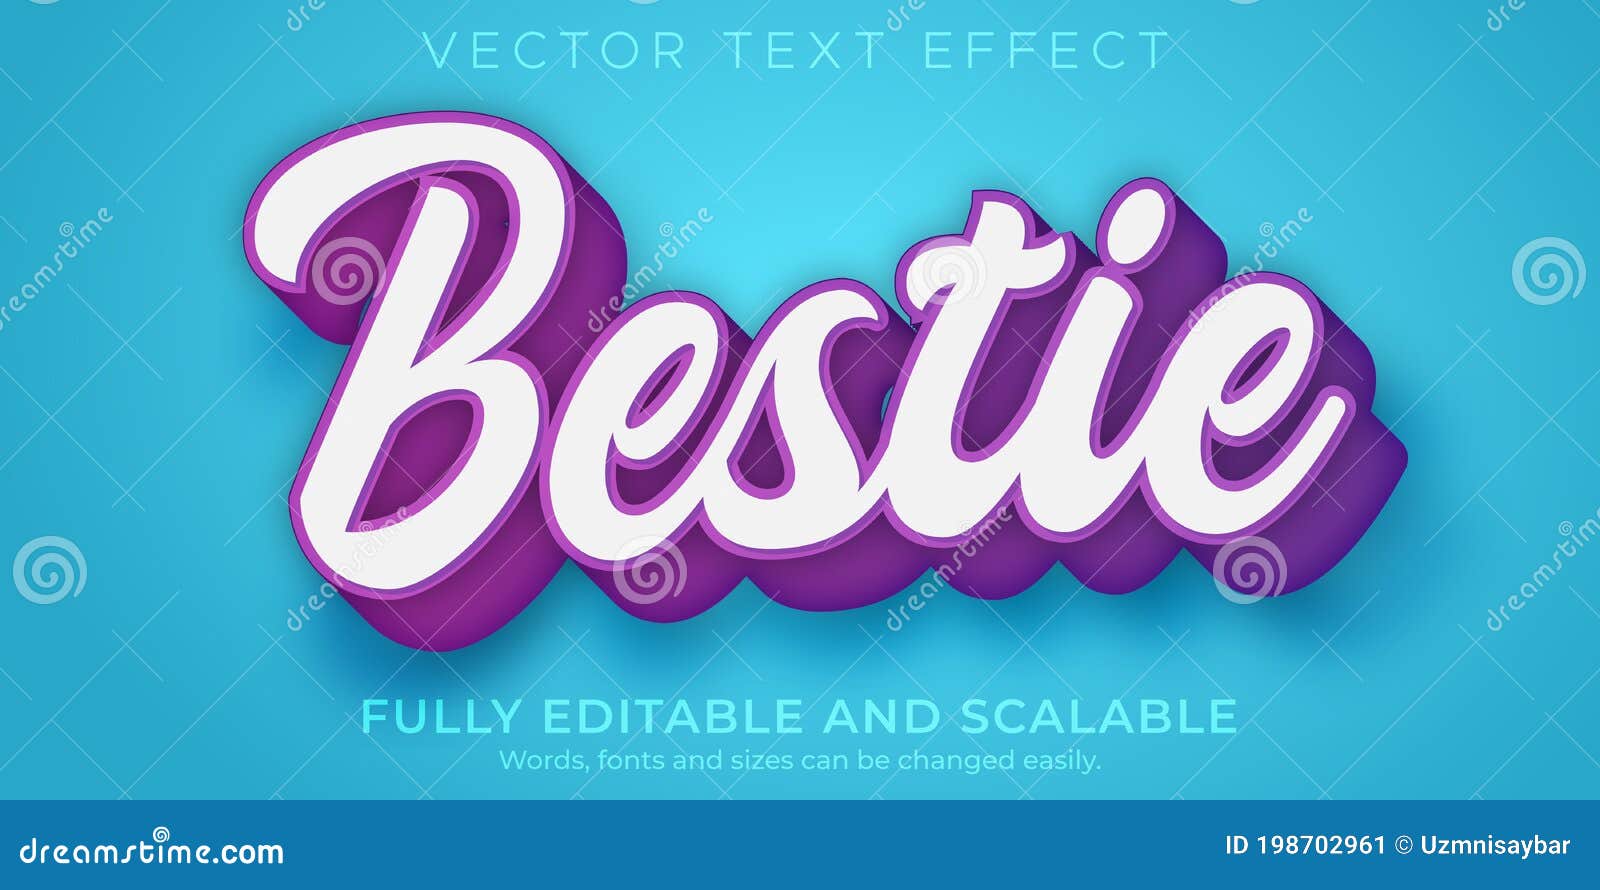 Bestie Text Effect, 3d Purple Editable Text Style Stock Vector ...